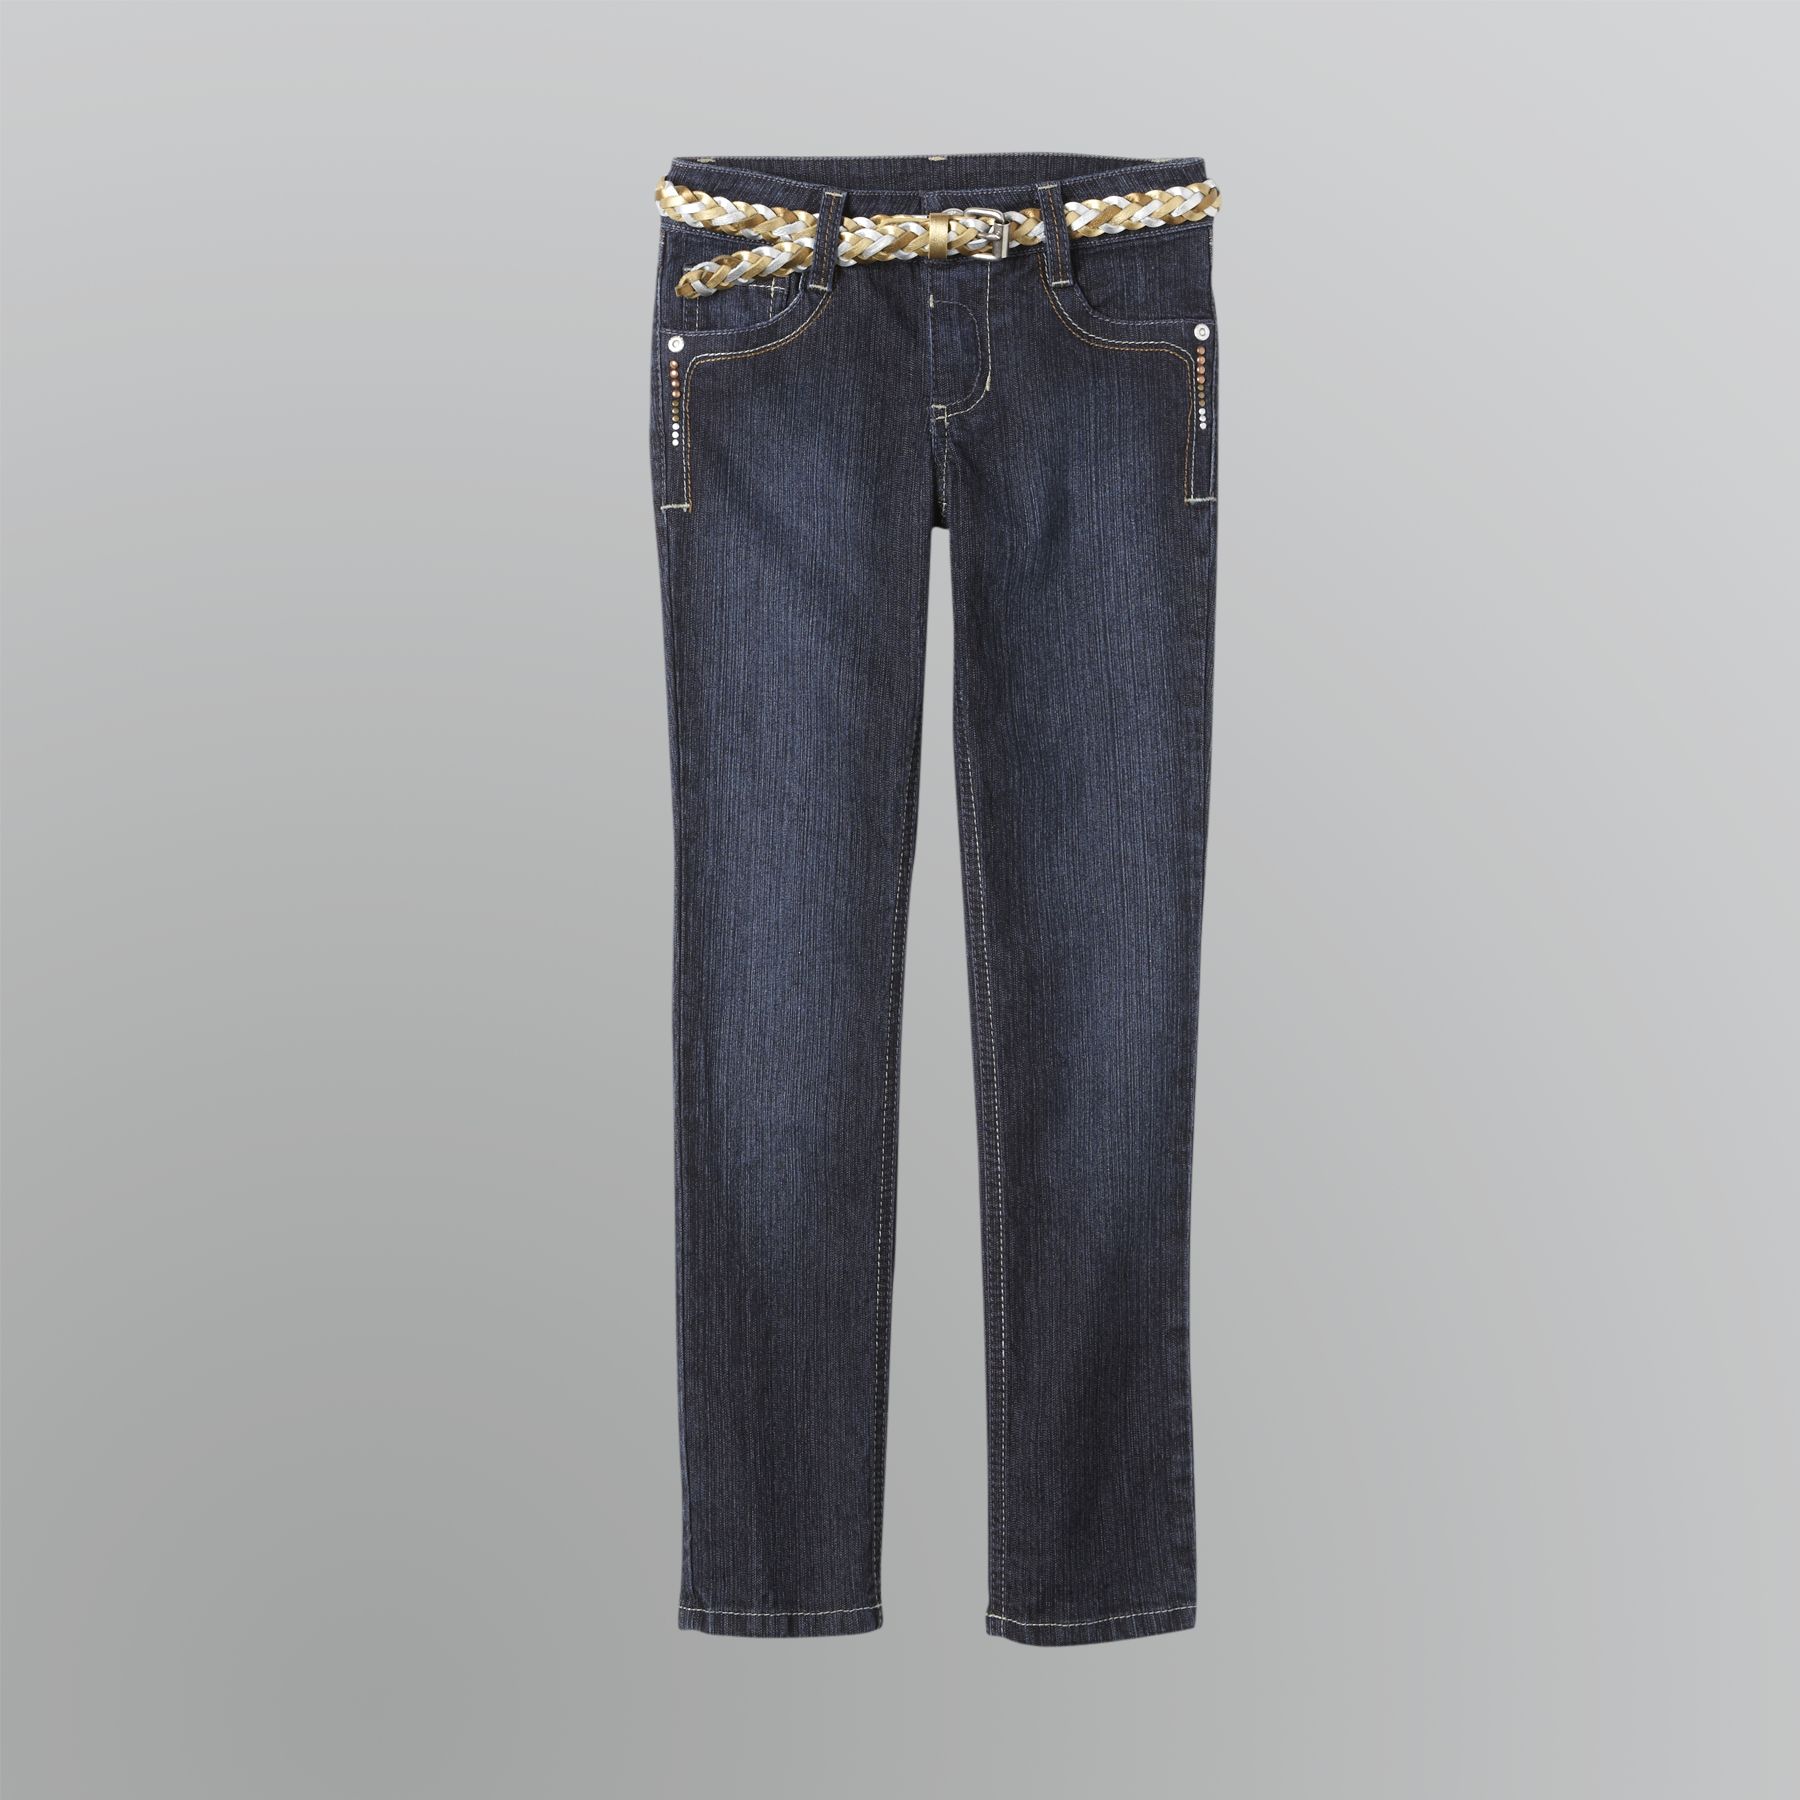 Bongo Girl's Embellished Skinny Jeans with Belt